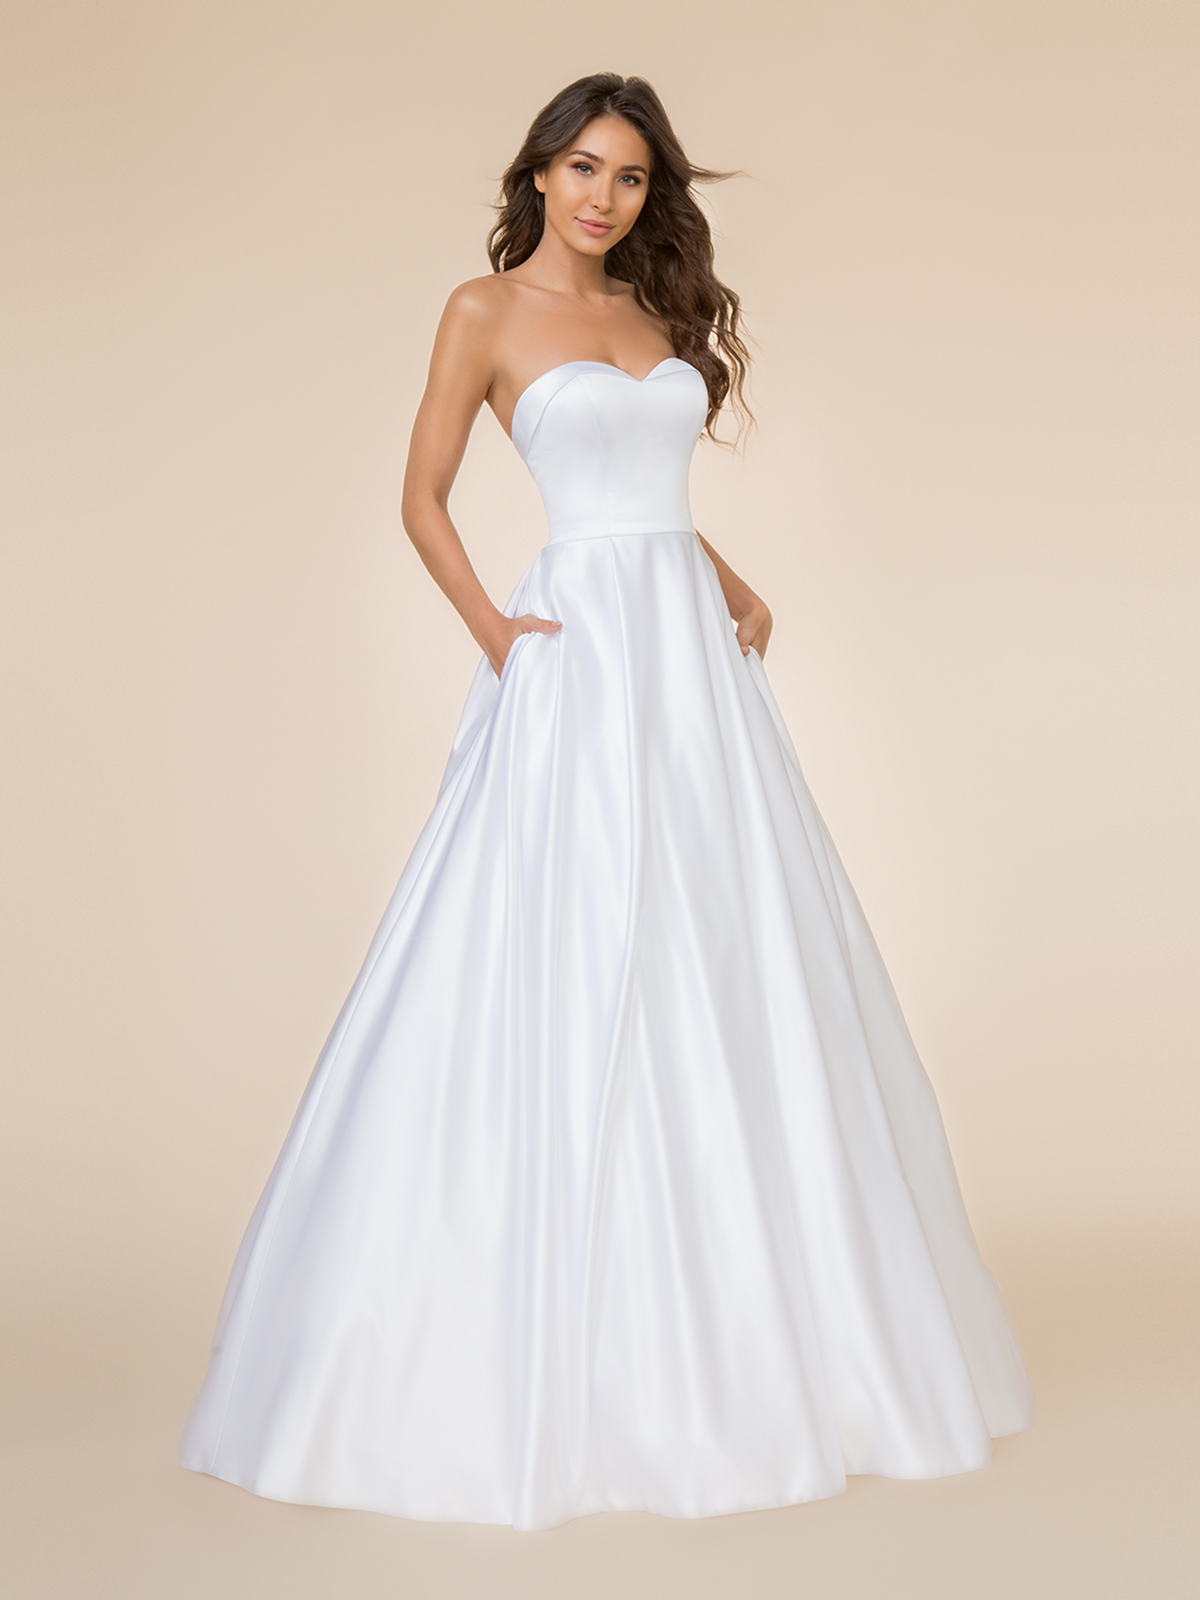 Bride wearing an elegant A-line wedding dress with a sweetheart neckline